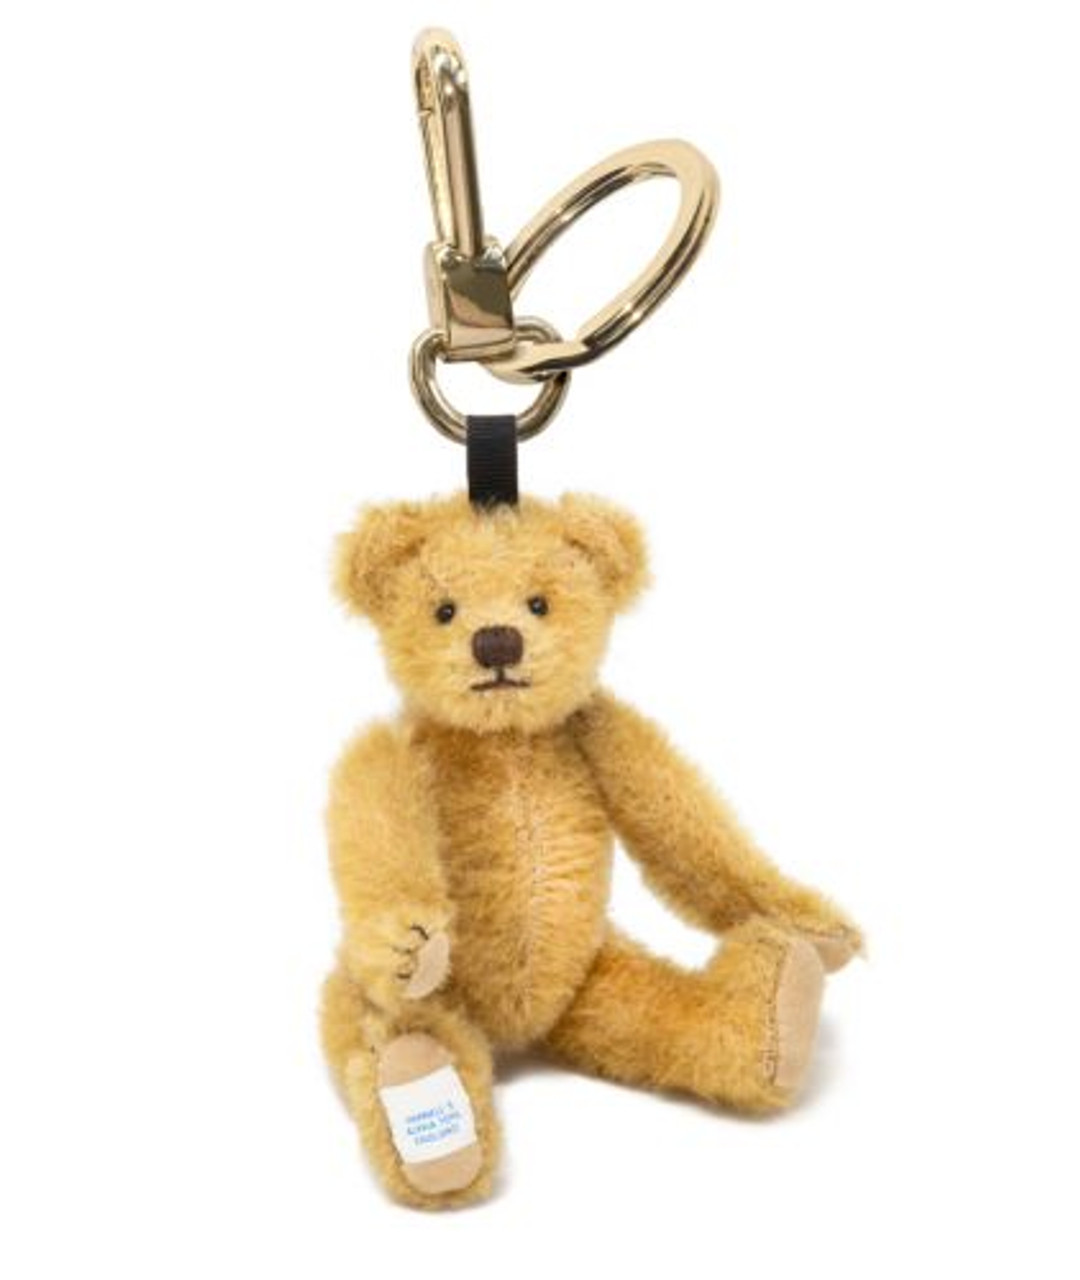 Edward Bear Key Charm, AA Milne Christopher Robin's Teddy Bear, Merrythought UK